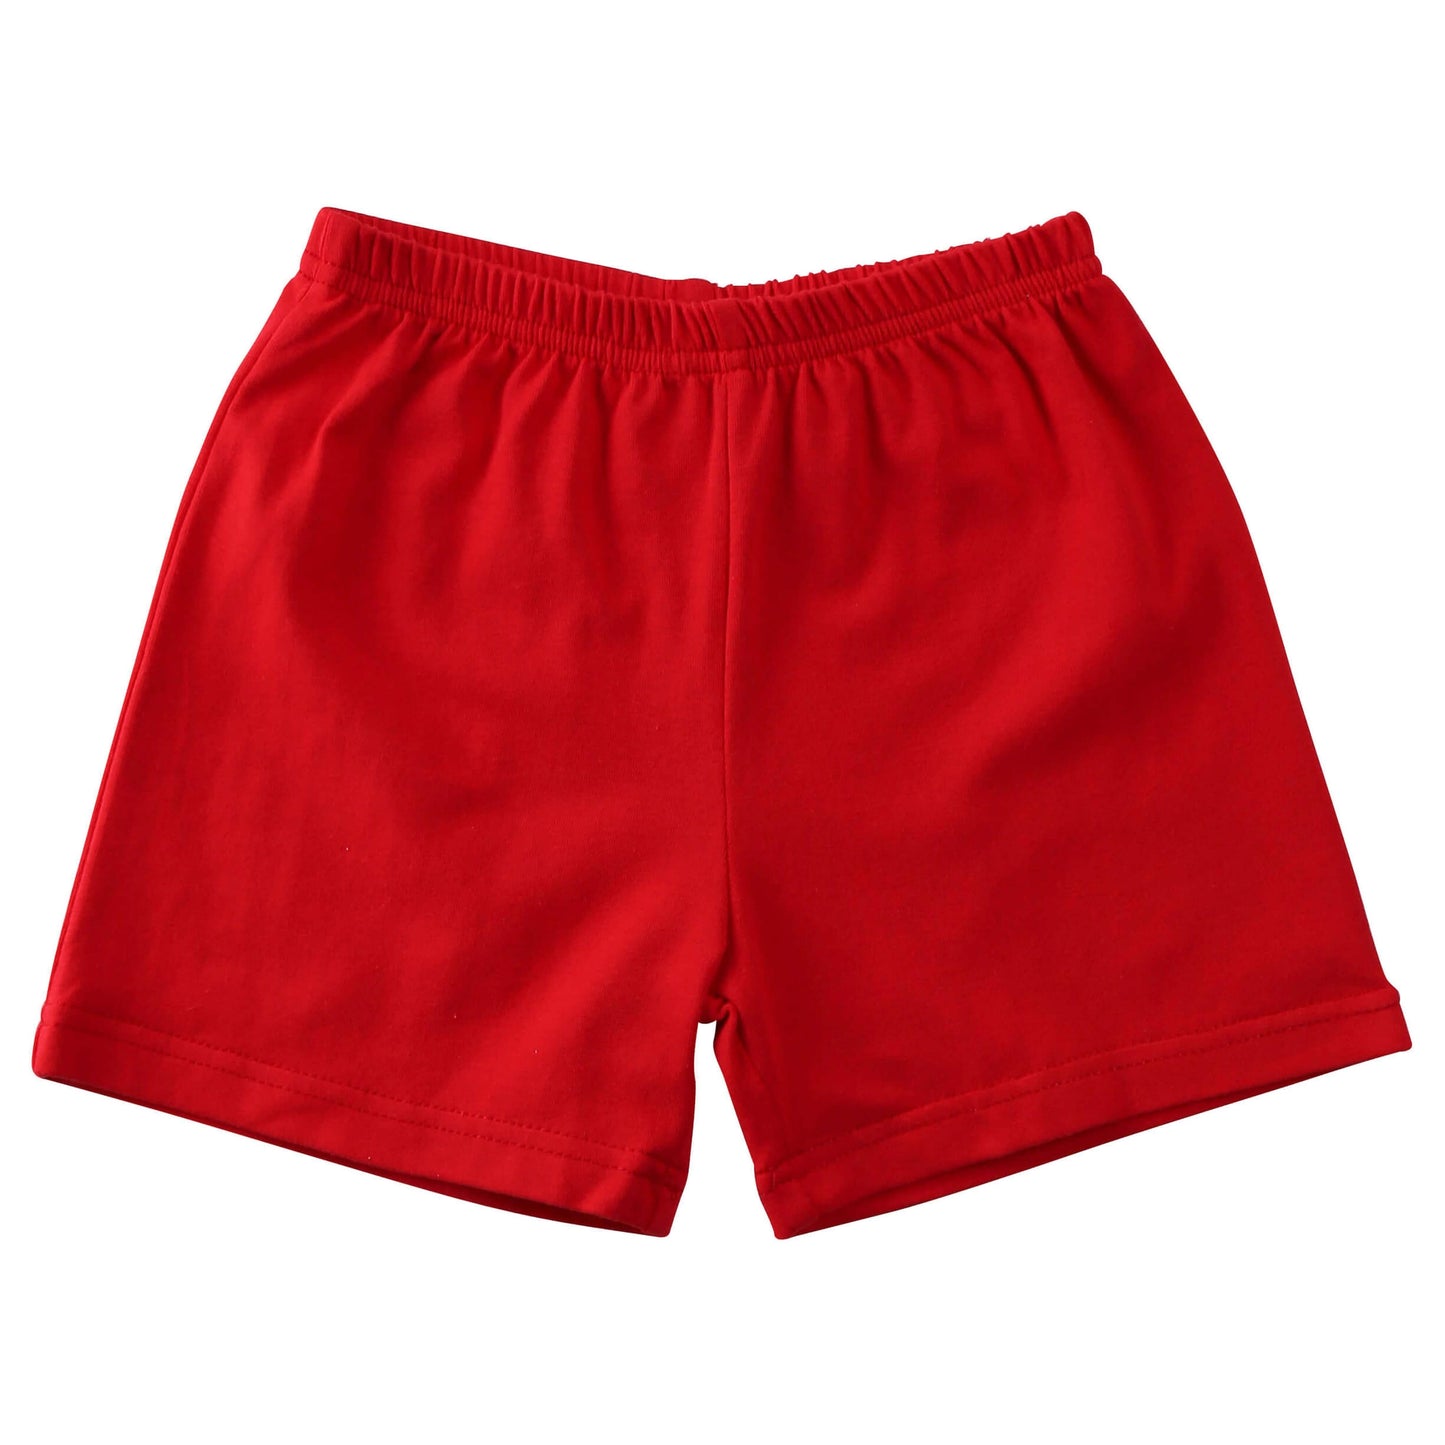 Boys Knit Shorts